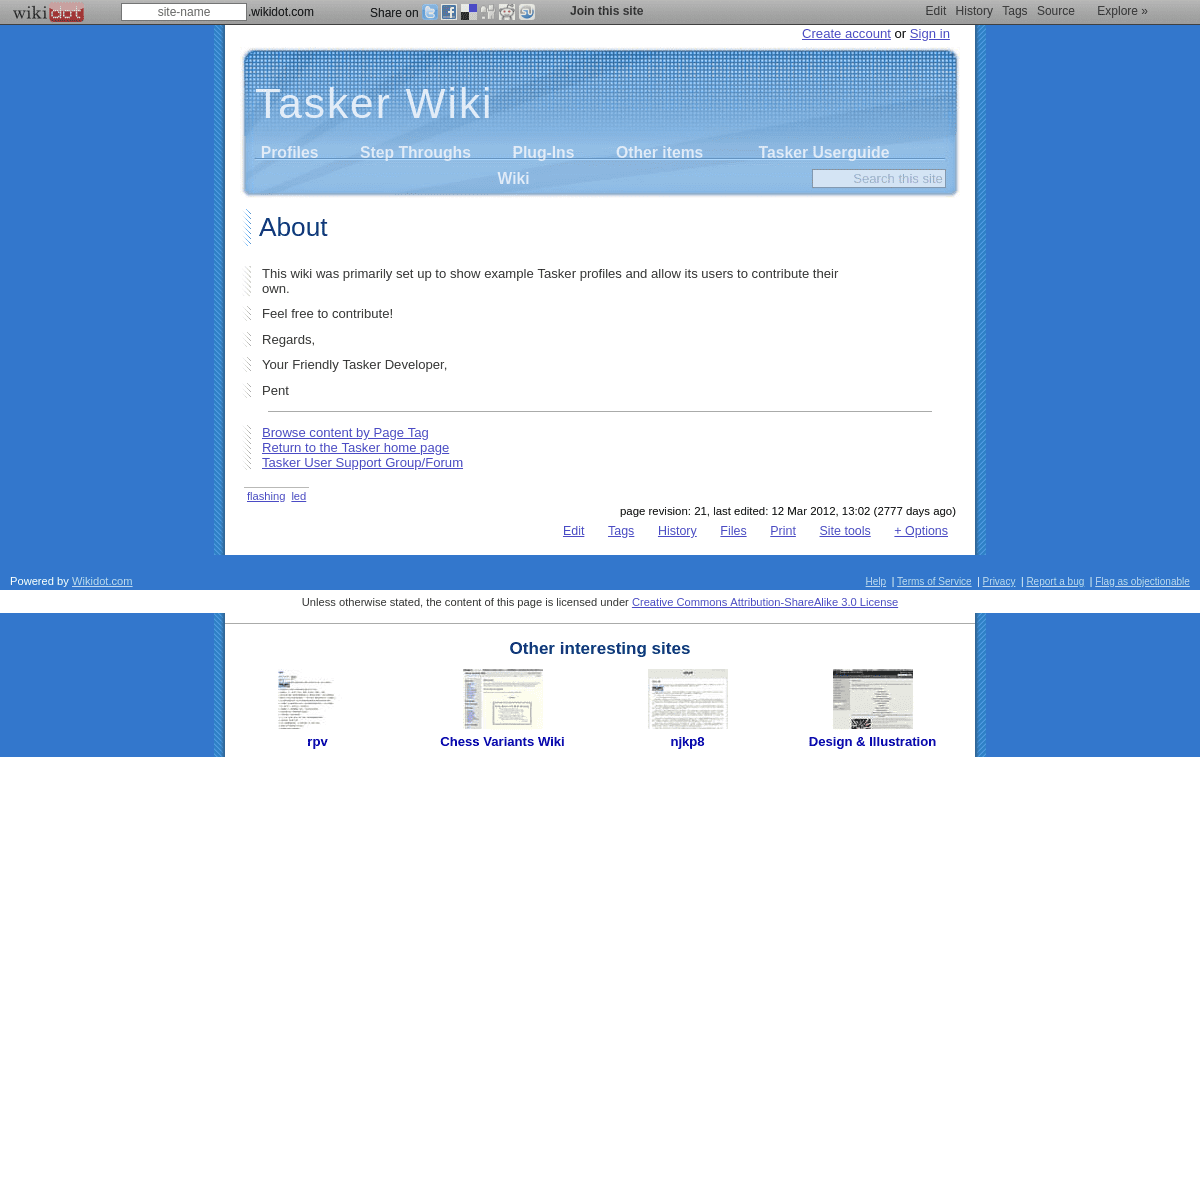 A complete backup of tasker.wikidot.com